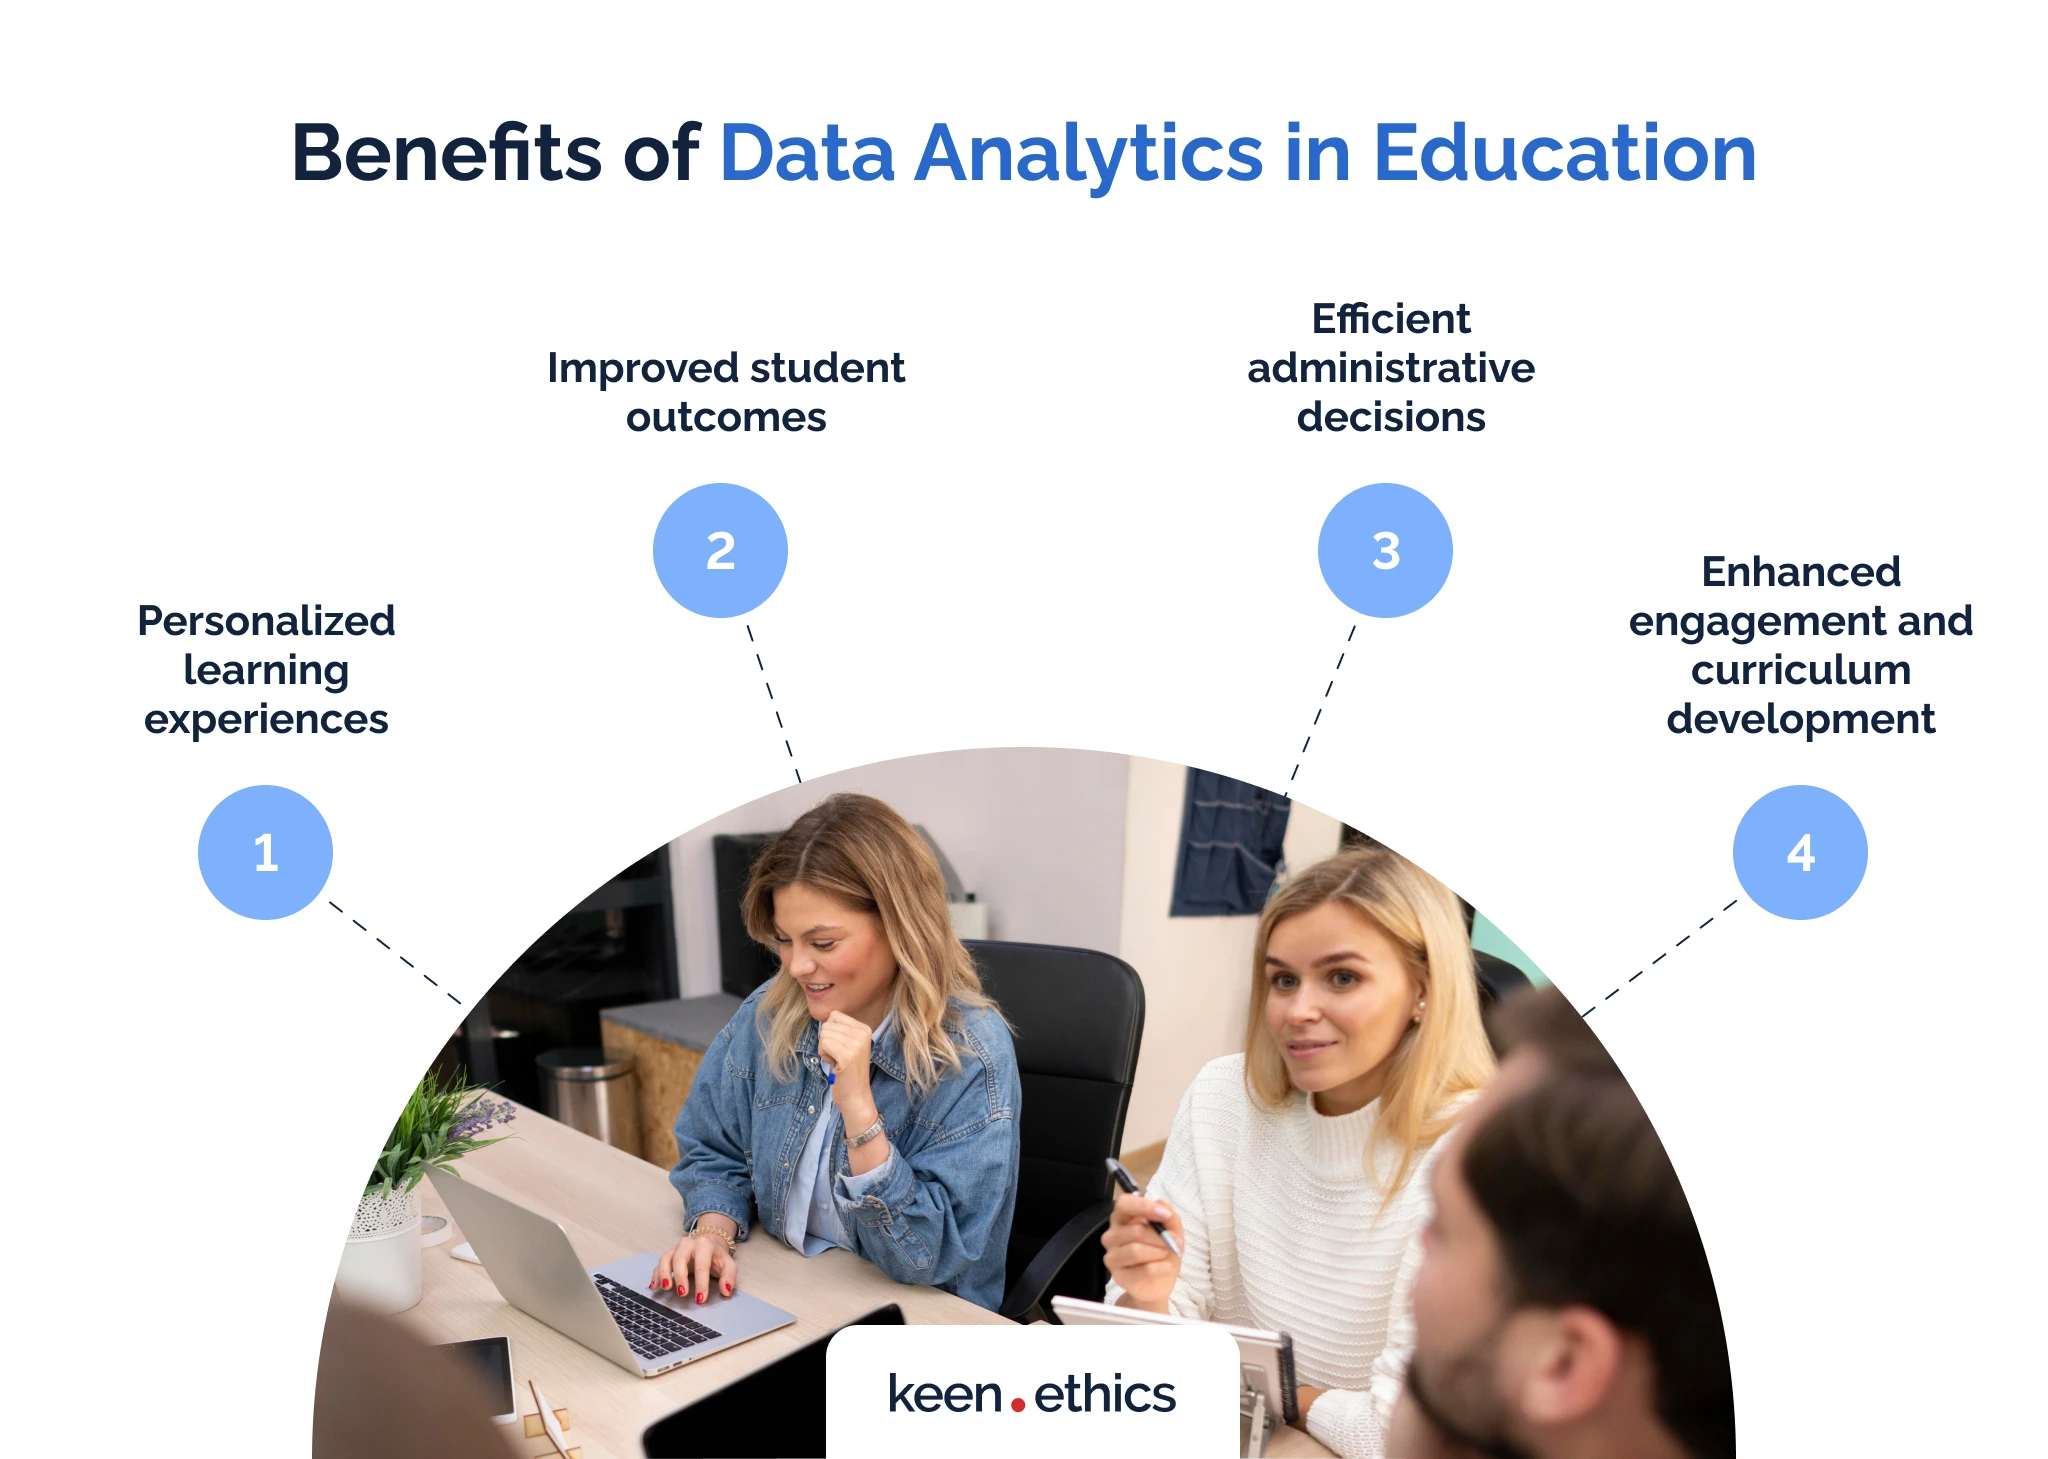 Benefits of data analytics in education